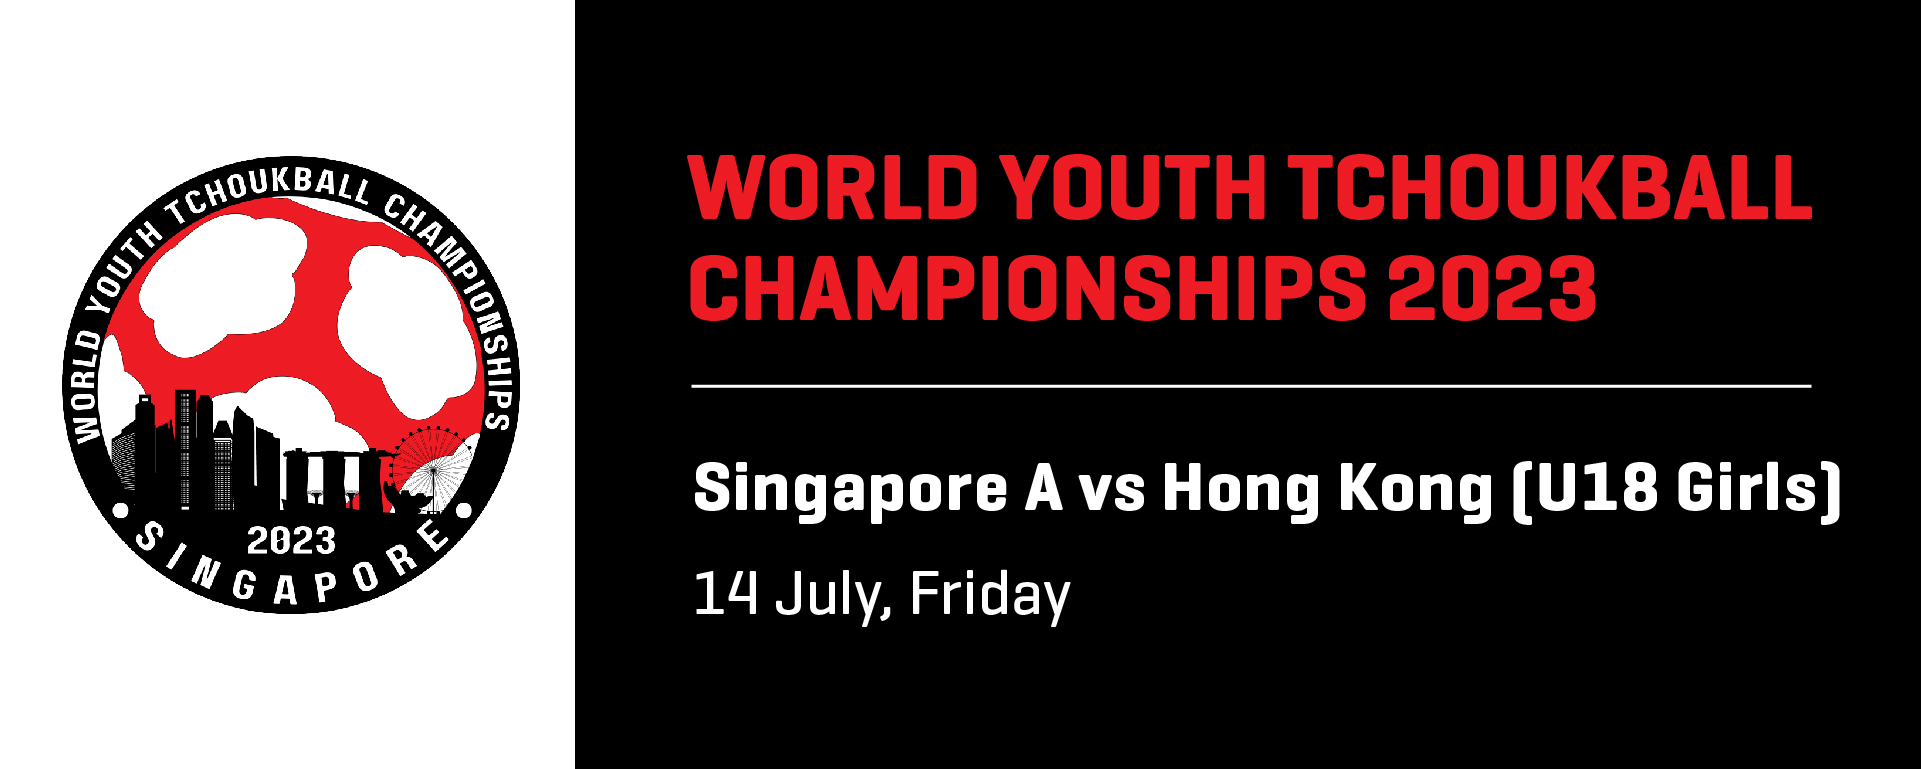 World Youth Tchoukball Championships 2023 | U18 Girls Singapore A vs Hong Kong